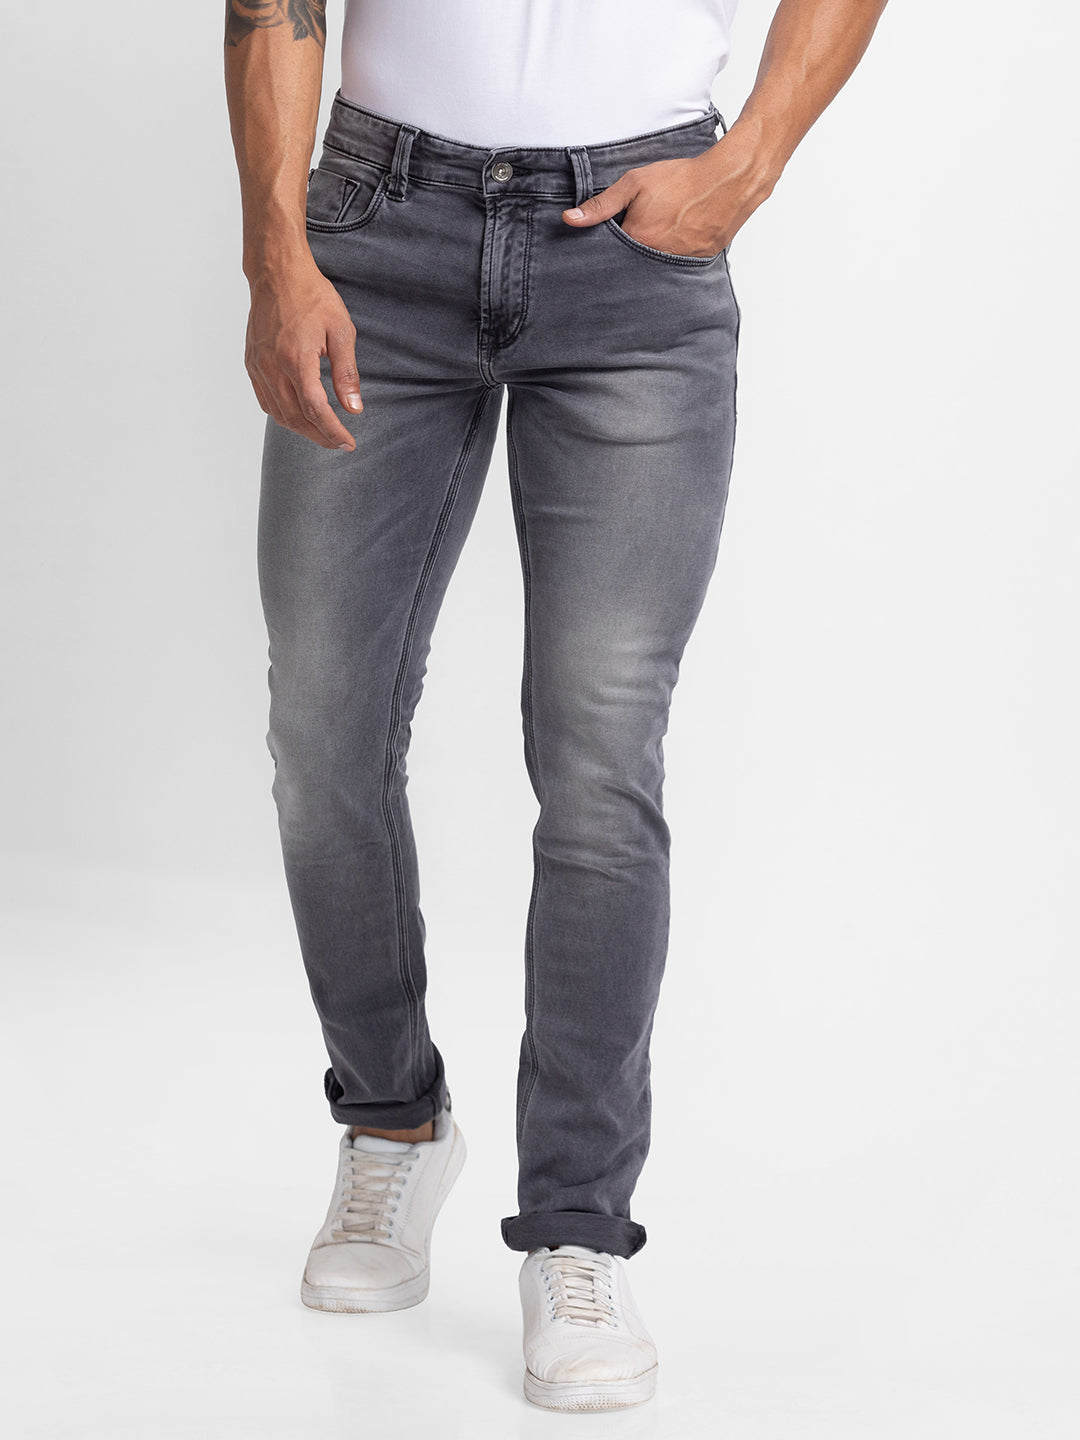 Spykar Light Grey Cotton Regular Fit Narrow Length Jeans For Men (Rover)